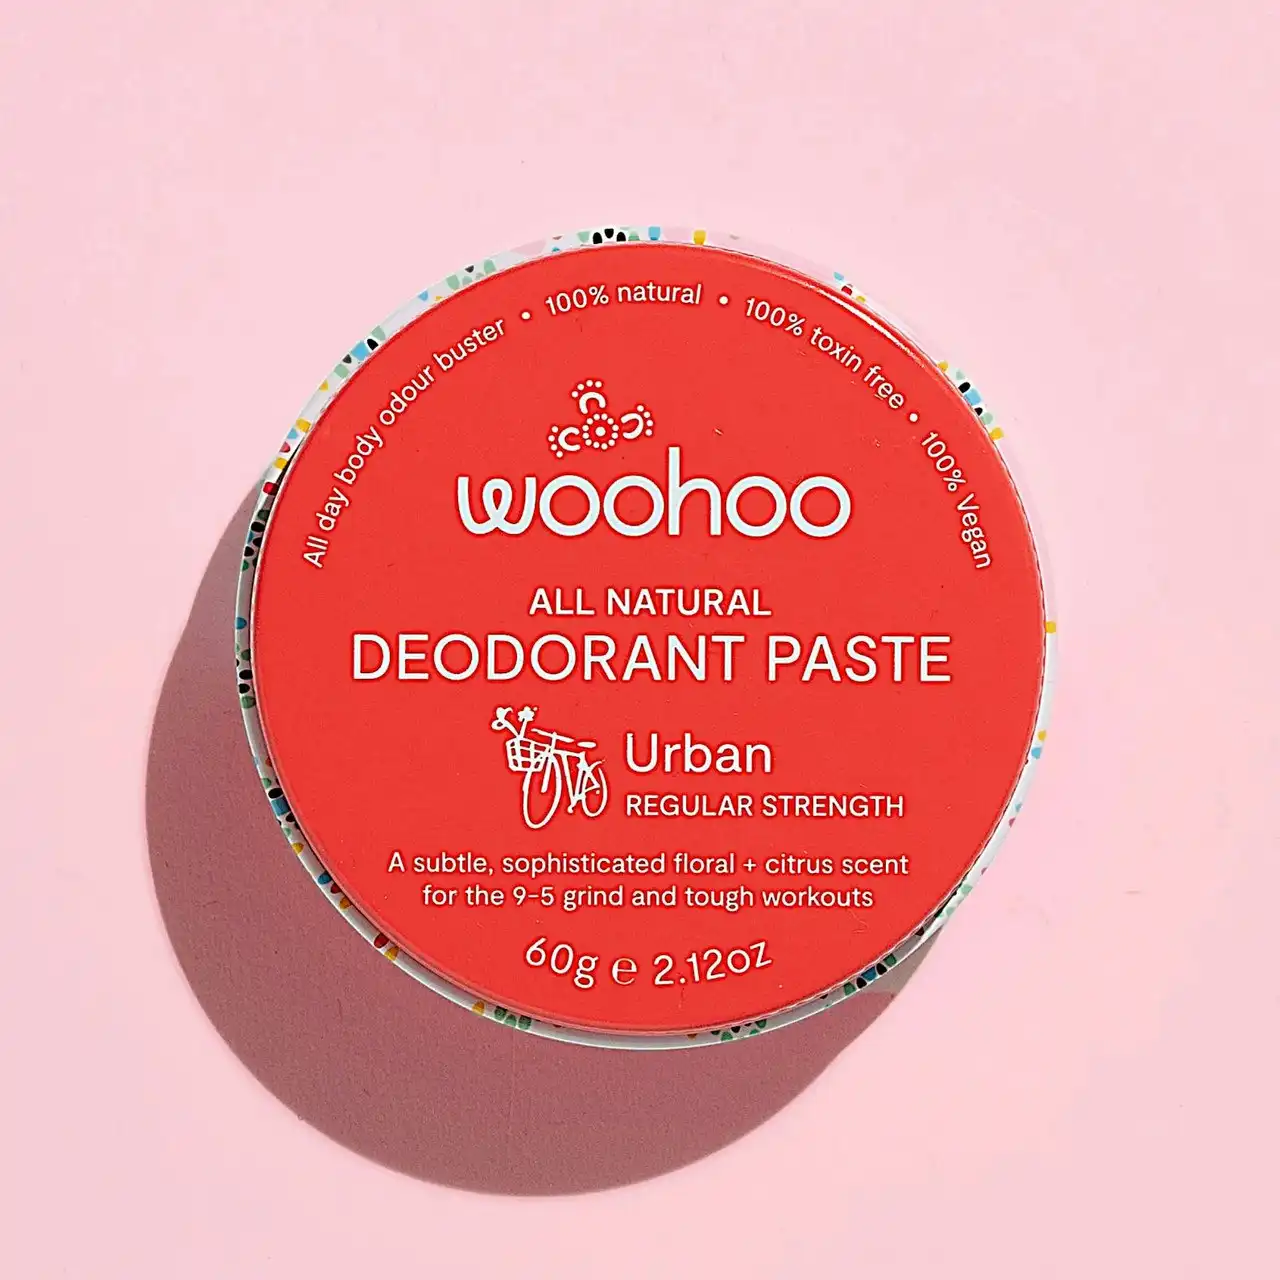 Woohoo All Natural Deodorant Paste Urban 60g